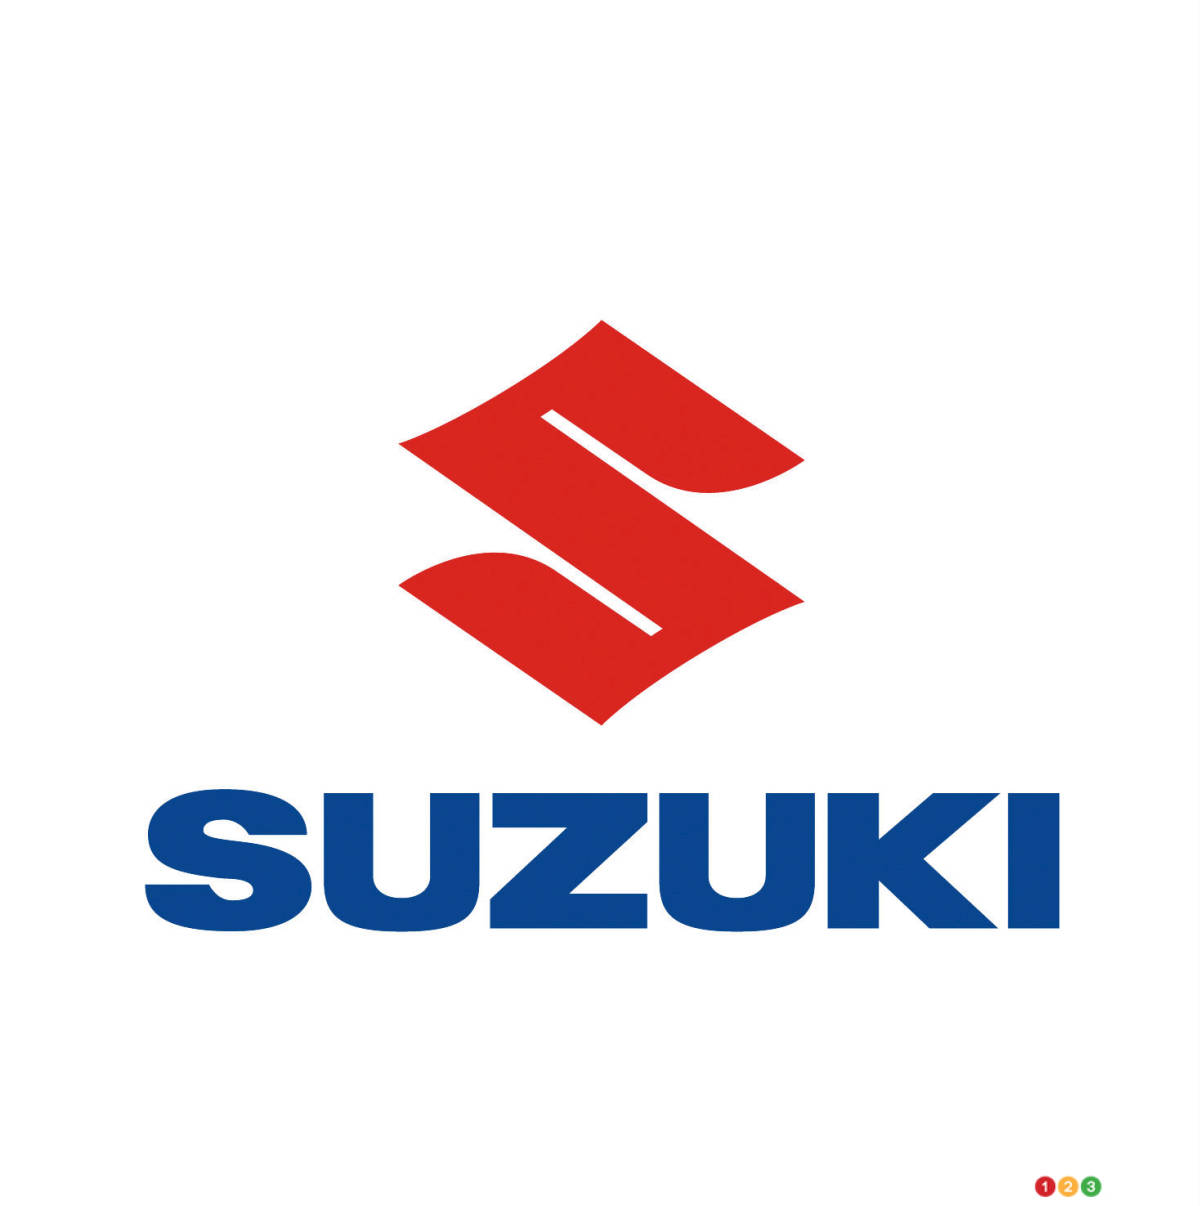 Suzuki reports discrepancies in fuel economy tests